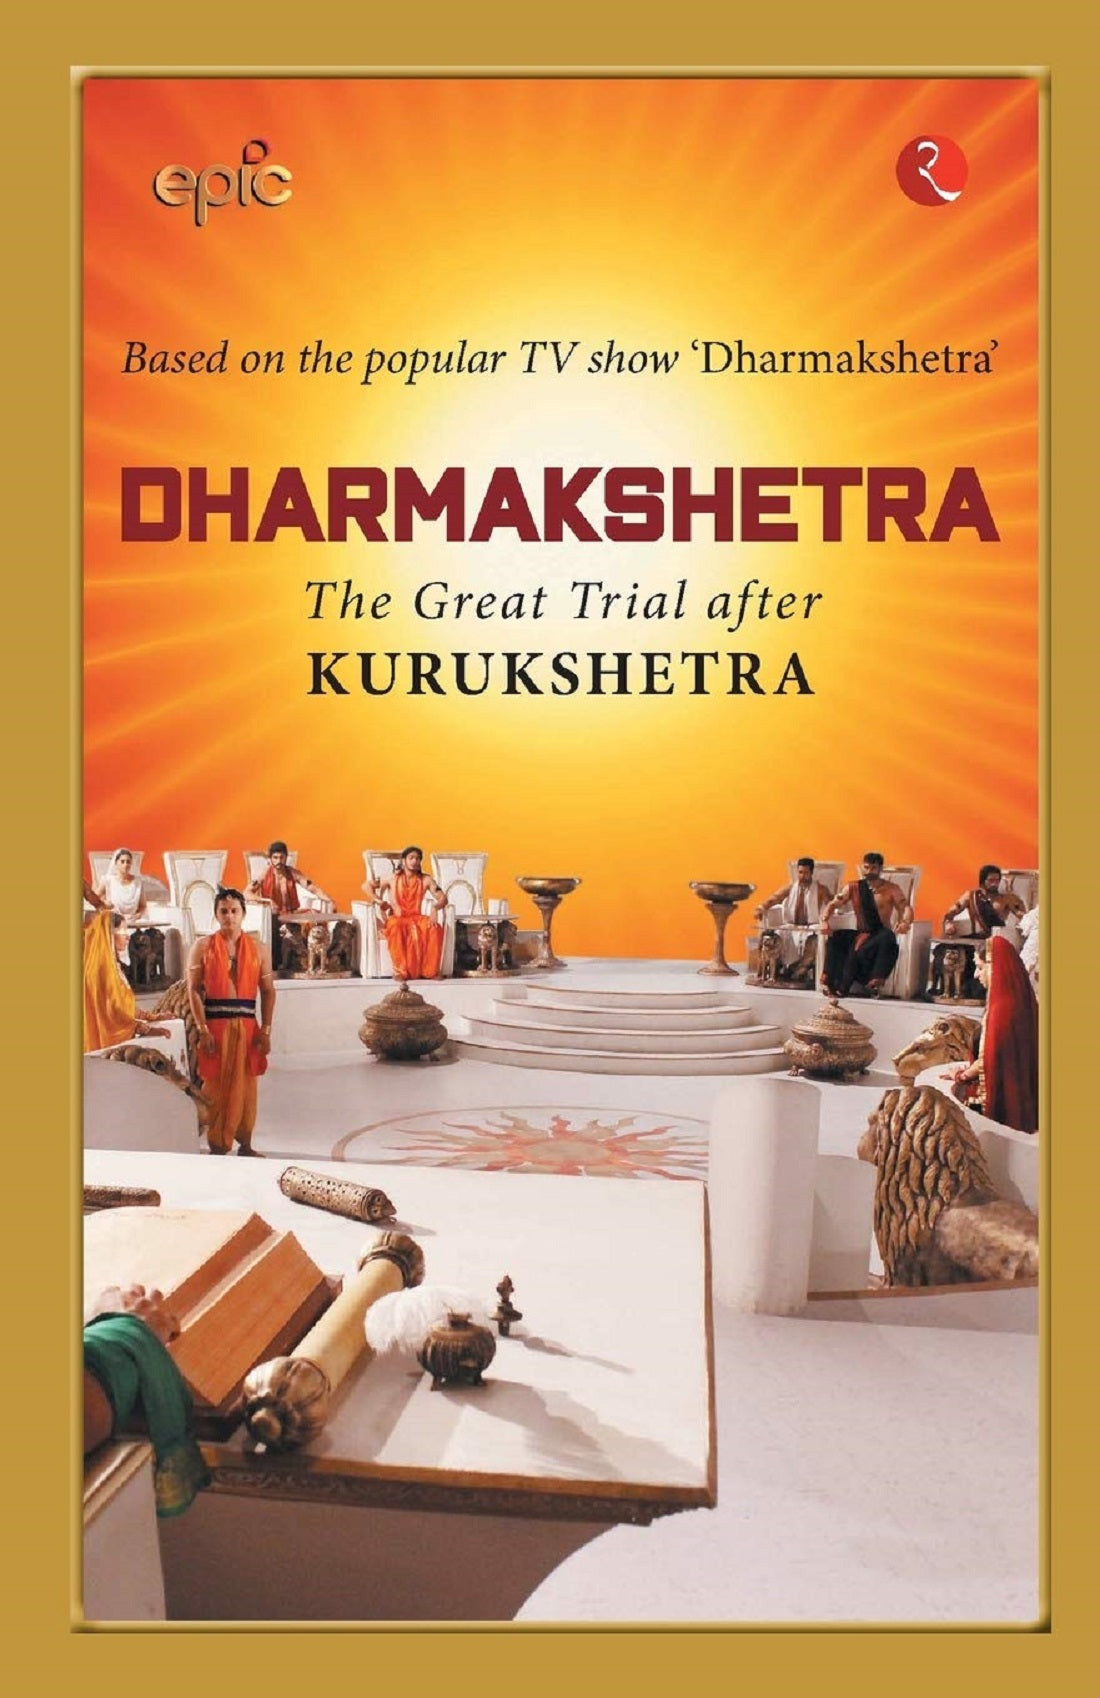 DHARMAKSHETRA THE GREAT TRIAL OF KURUKSHETRA